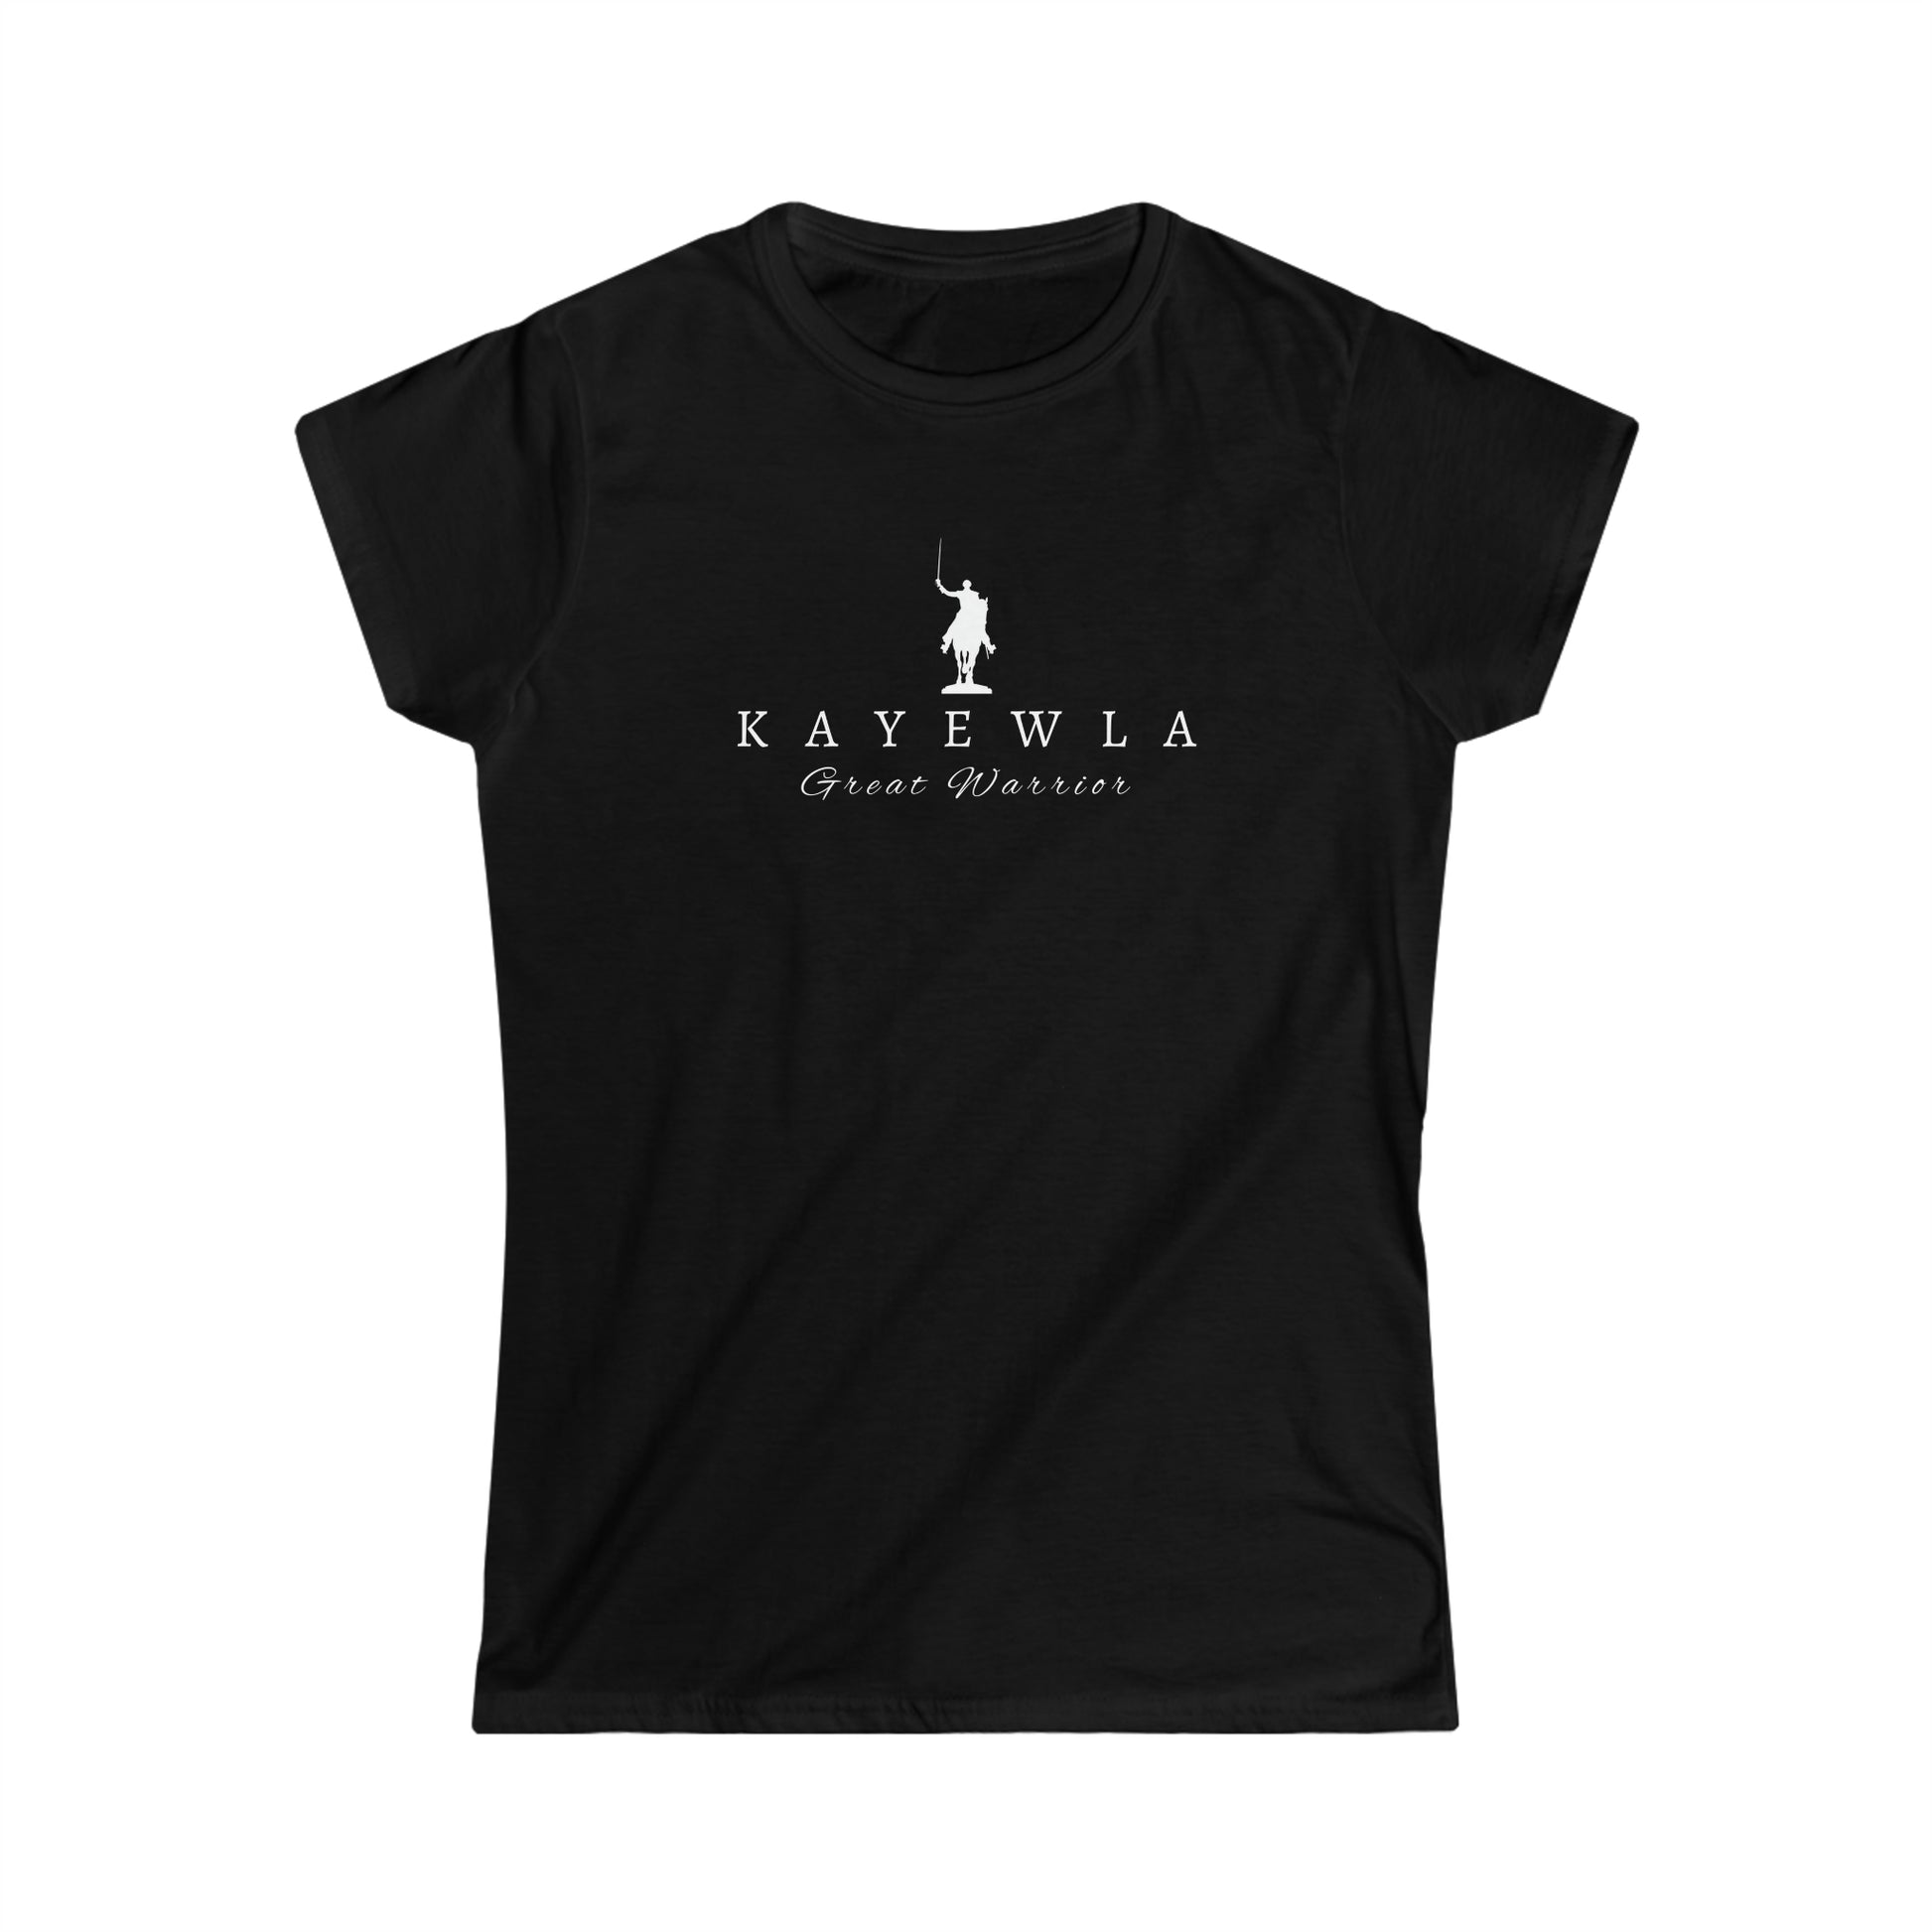 Lafayette Kayewla T-shirt Marquis de Lafayette on horseback on a tshirt with Kayewla name and Great Warrior written below